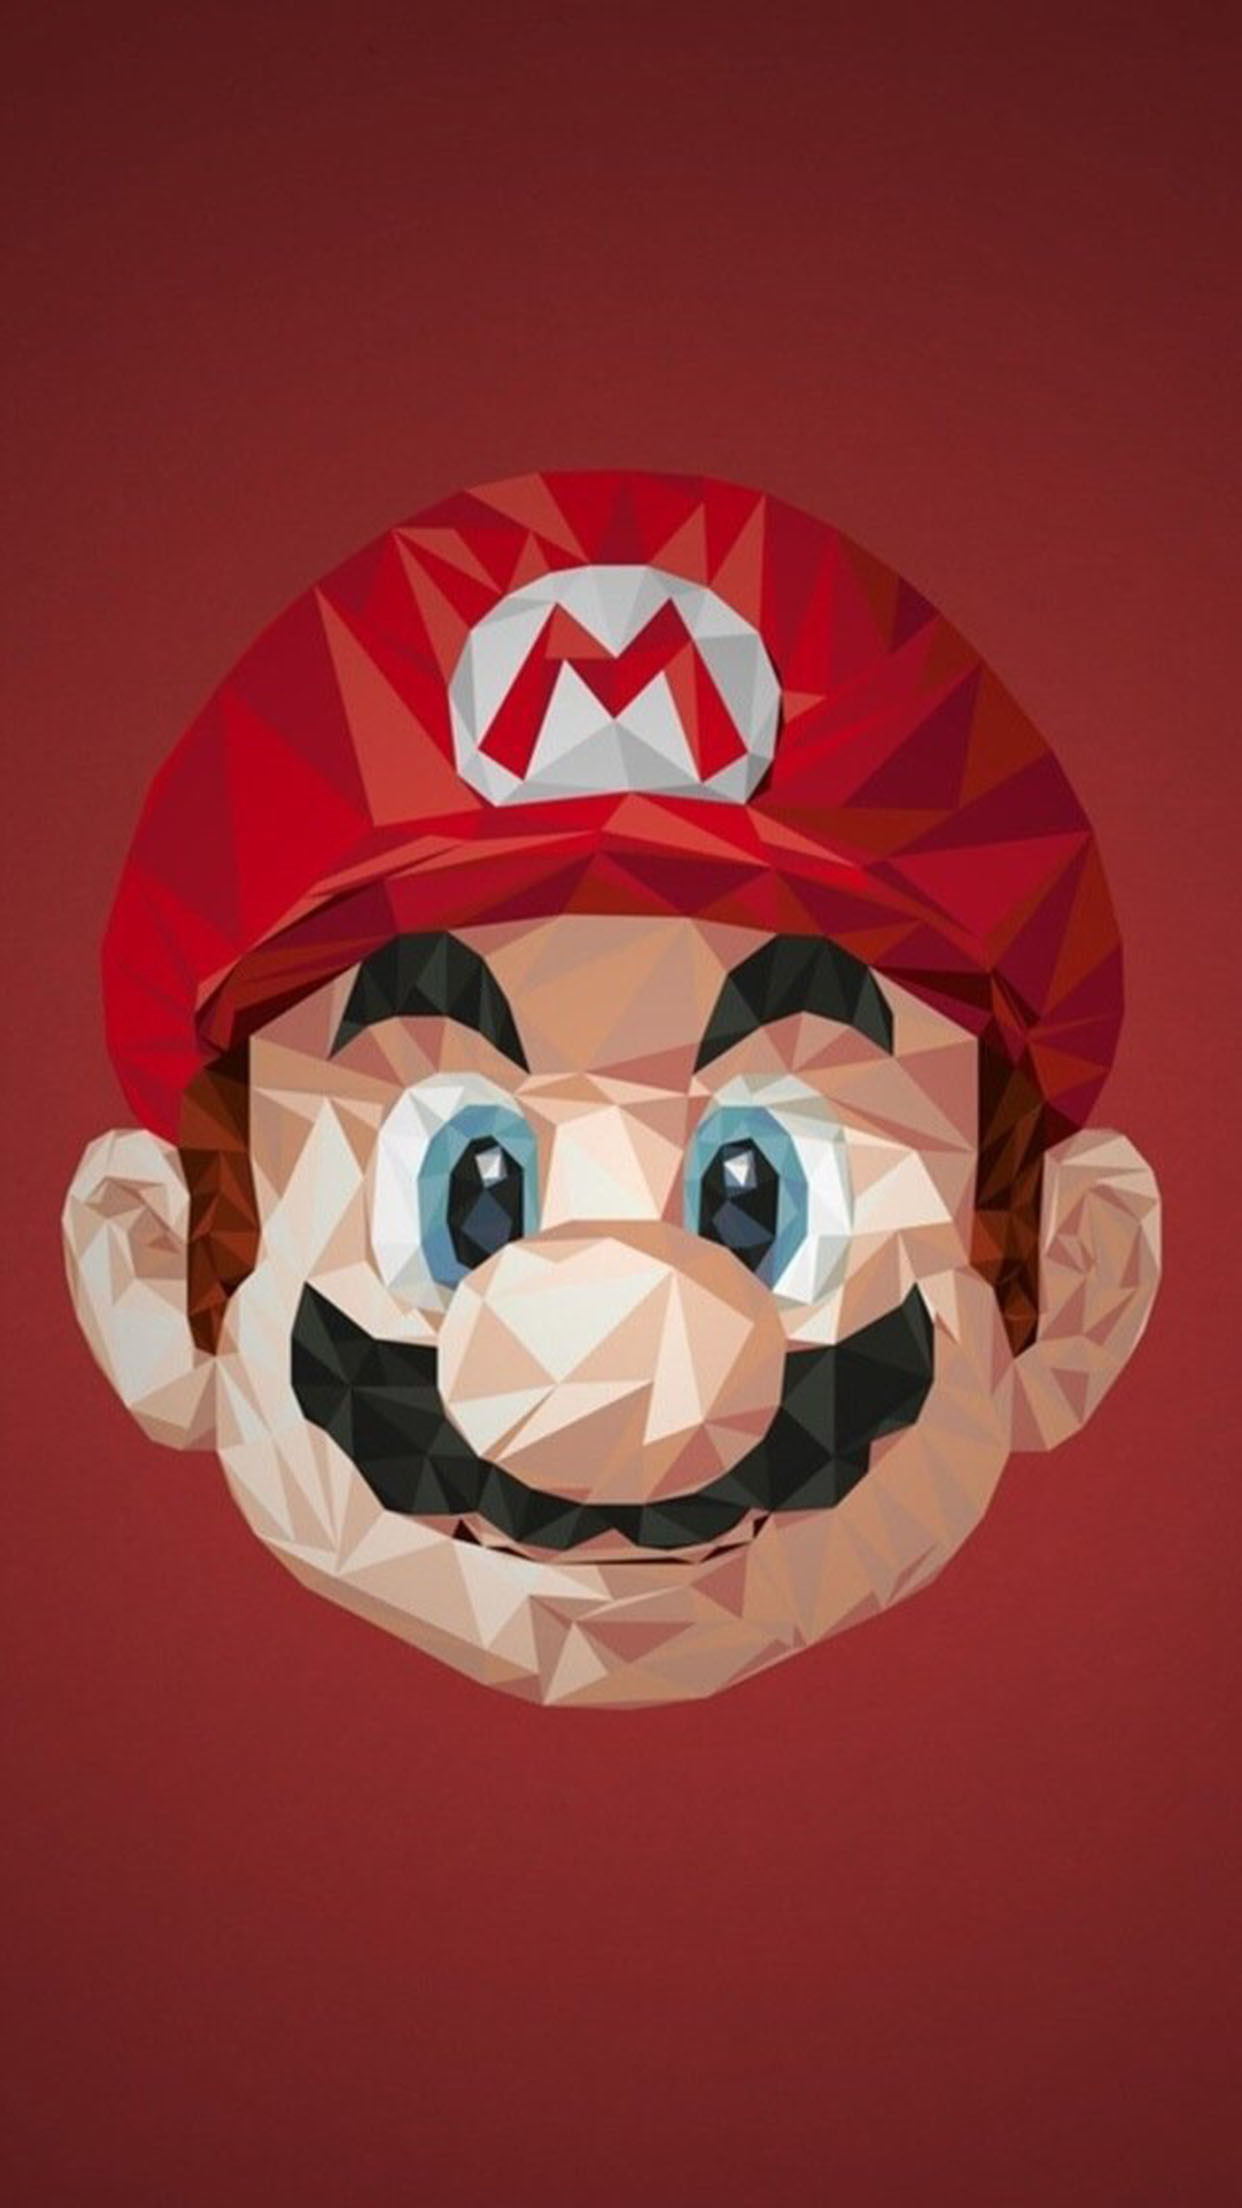 Super Mario Wallpaper Iphone